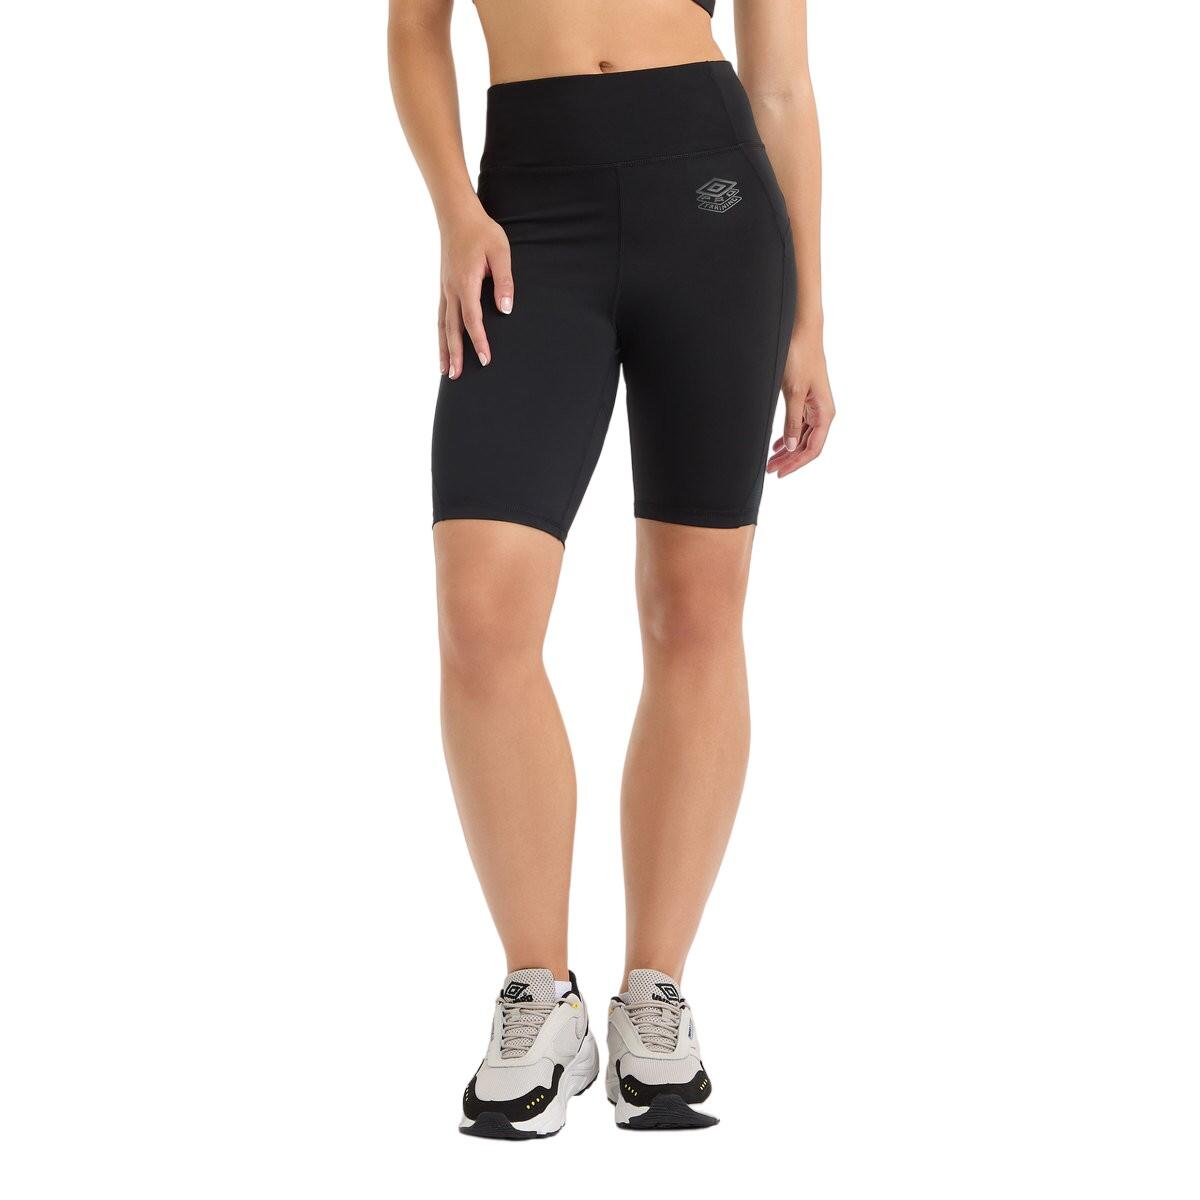 Womens/Ladies Pro Training Cycling Shorts (Black) 3/4